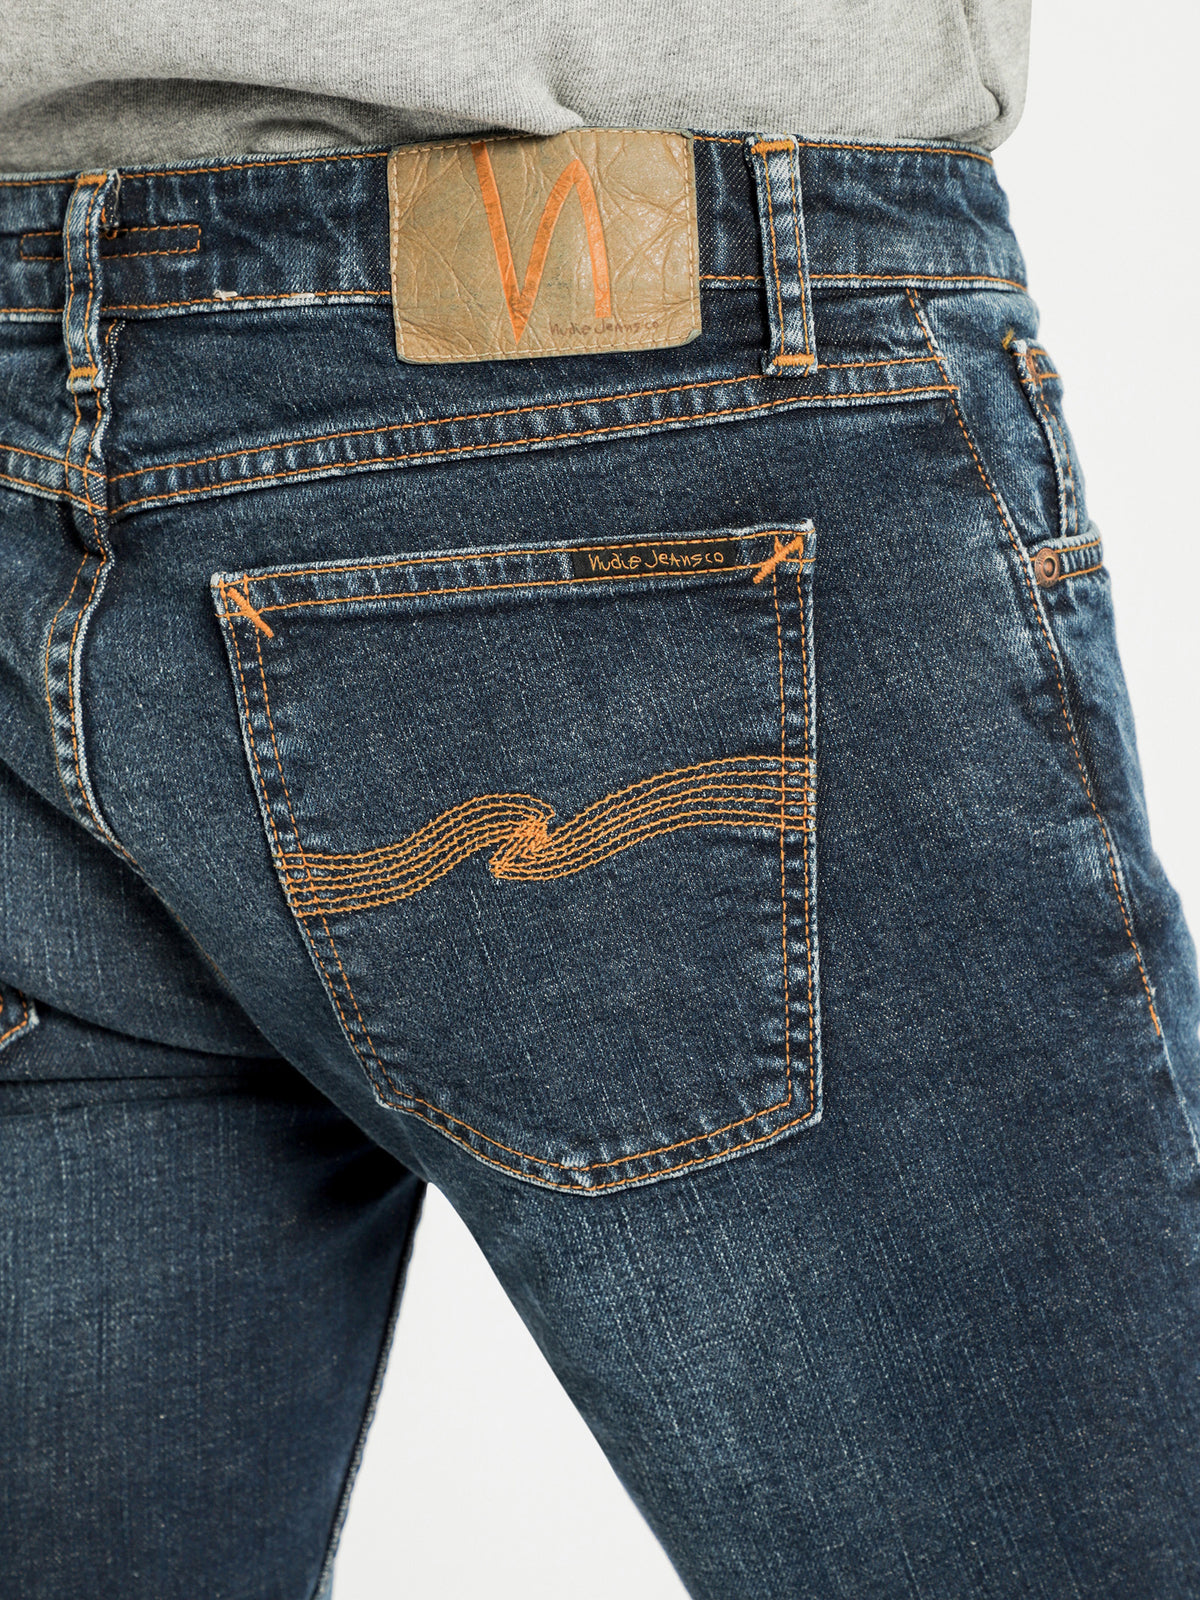 Skinny Lin Jeans in West Coast Worn Denim